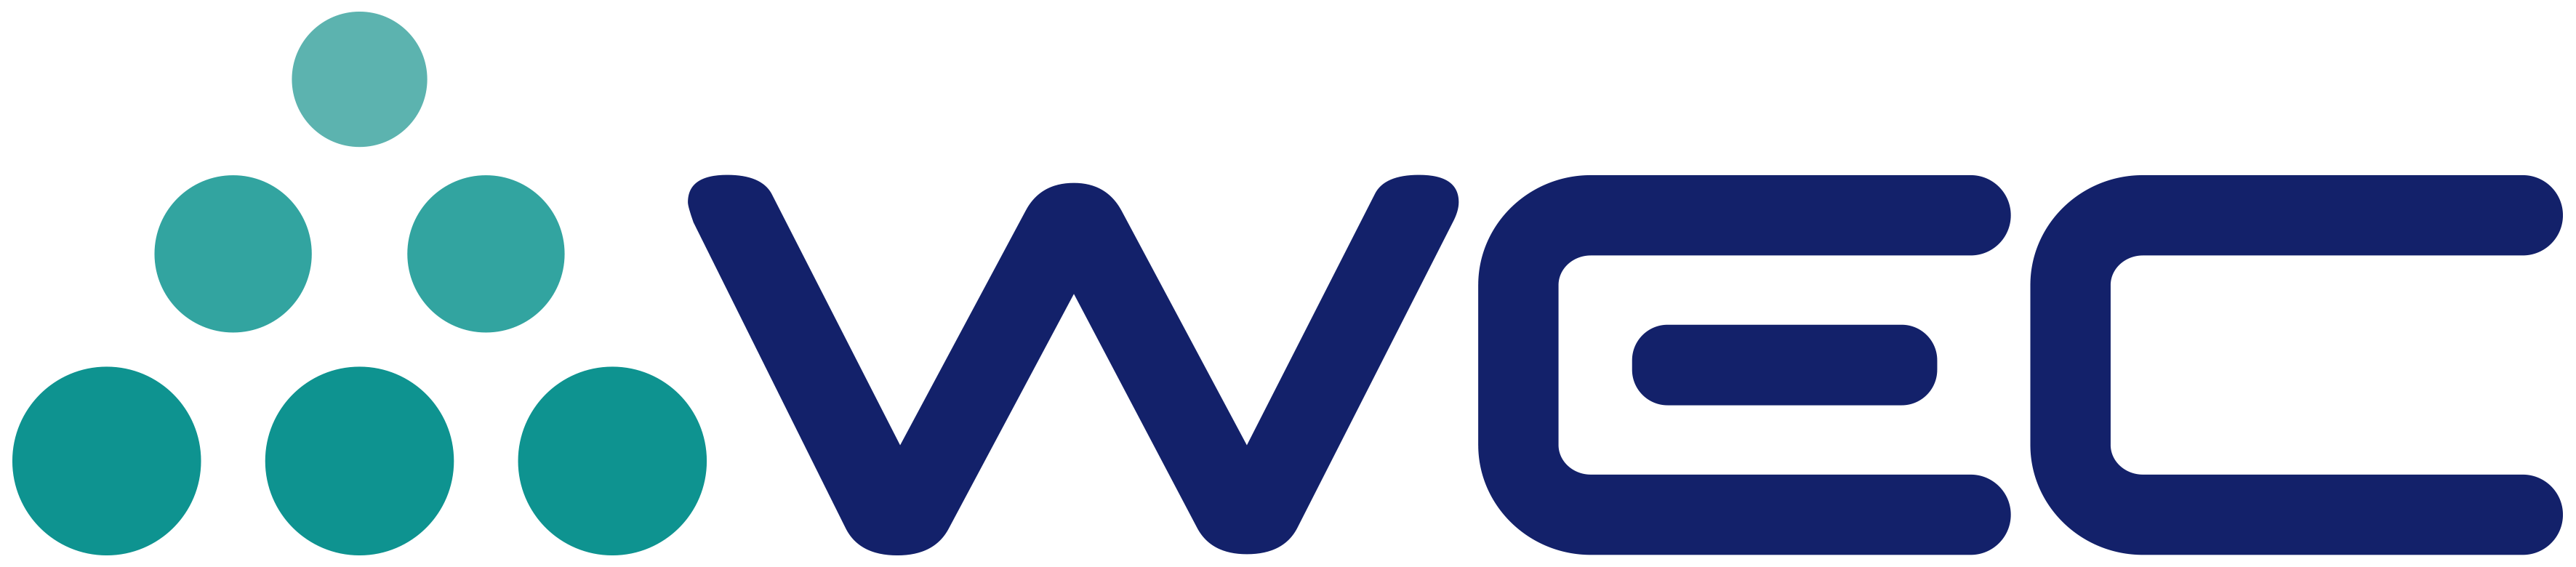 Wec Engineers & Constructors Pte Ltd company logo